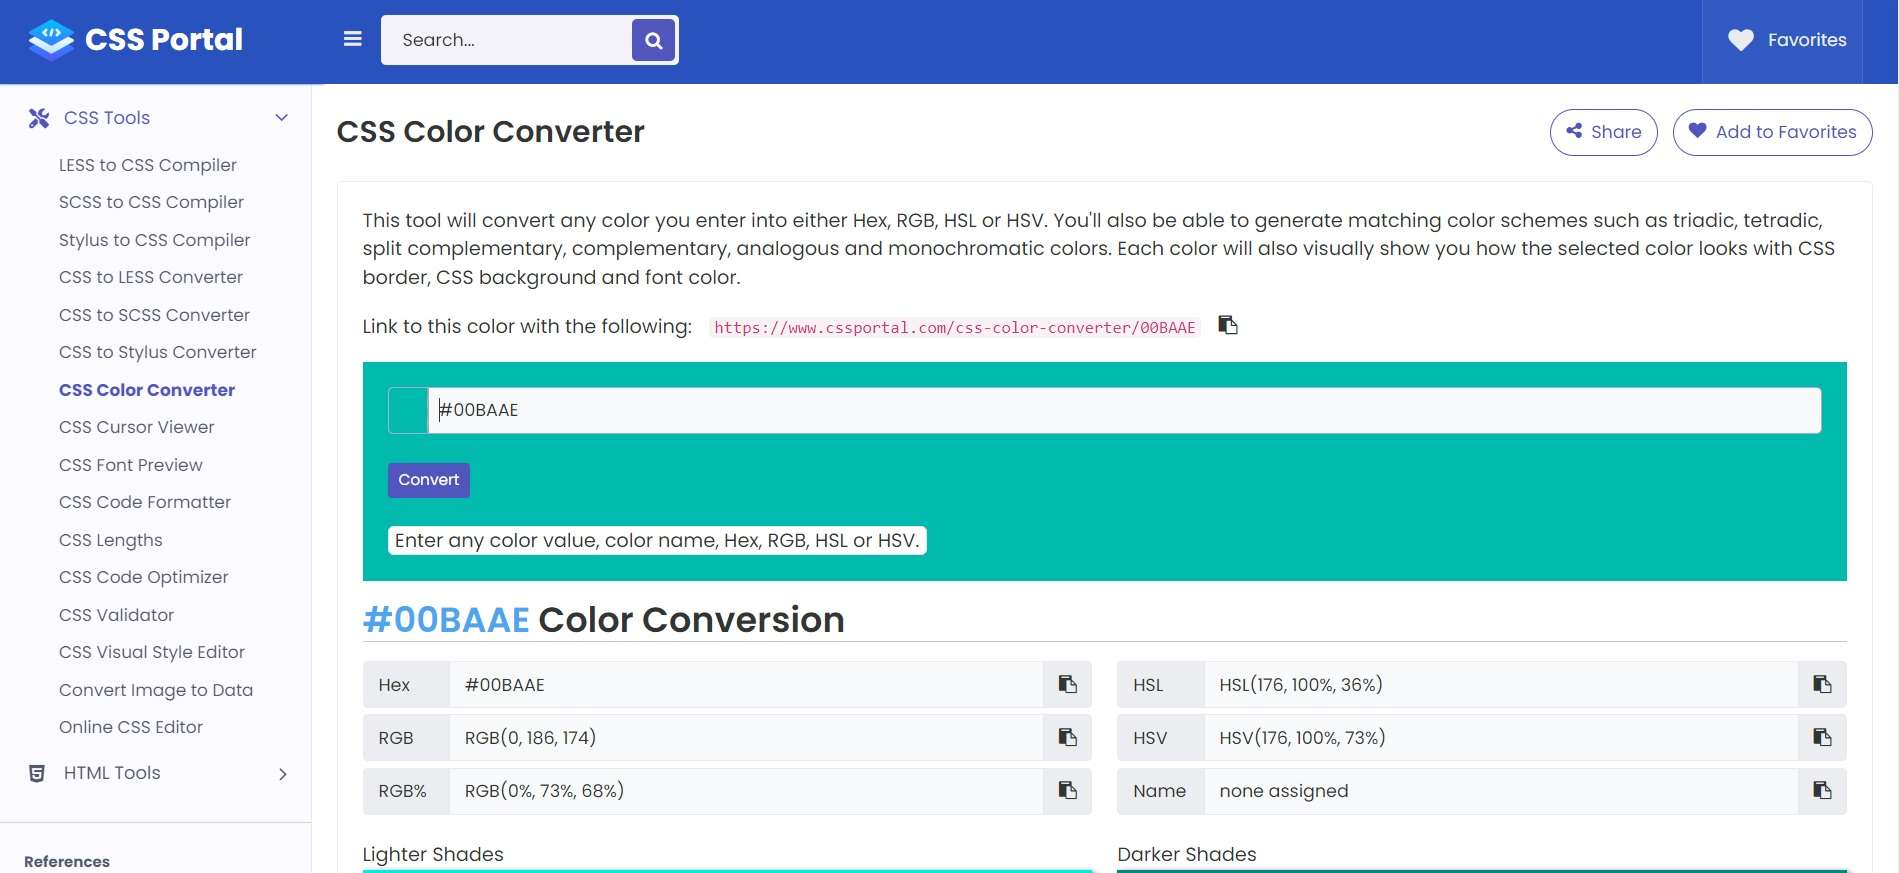 css portal color converter interface